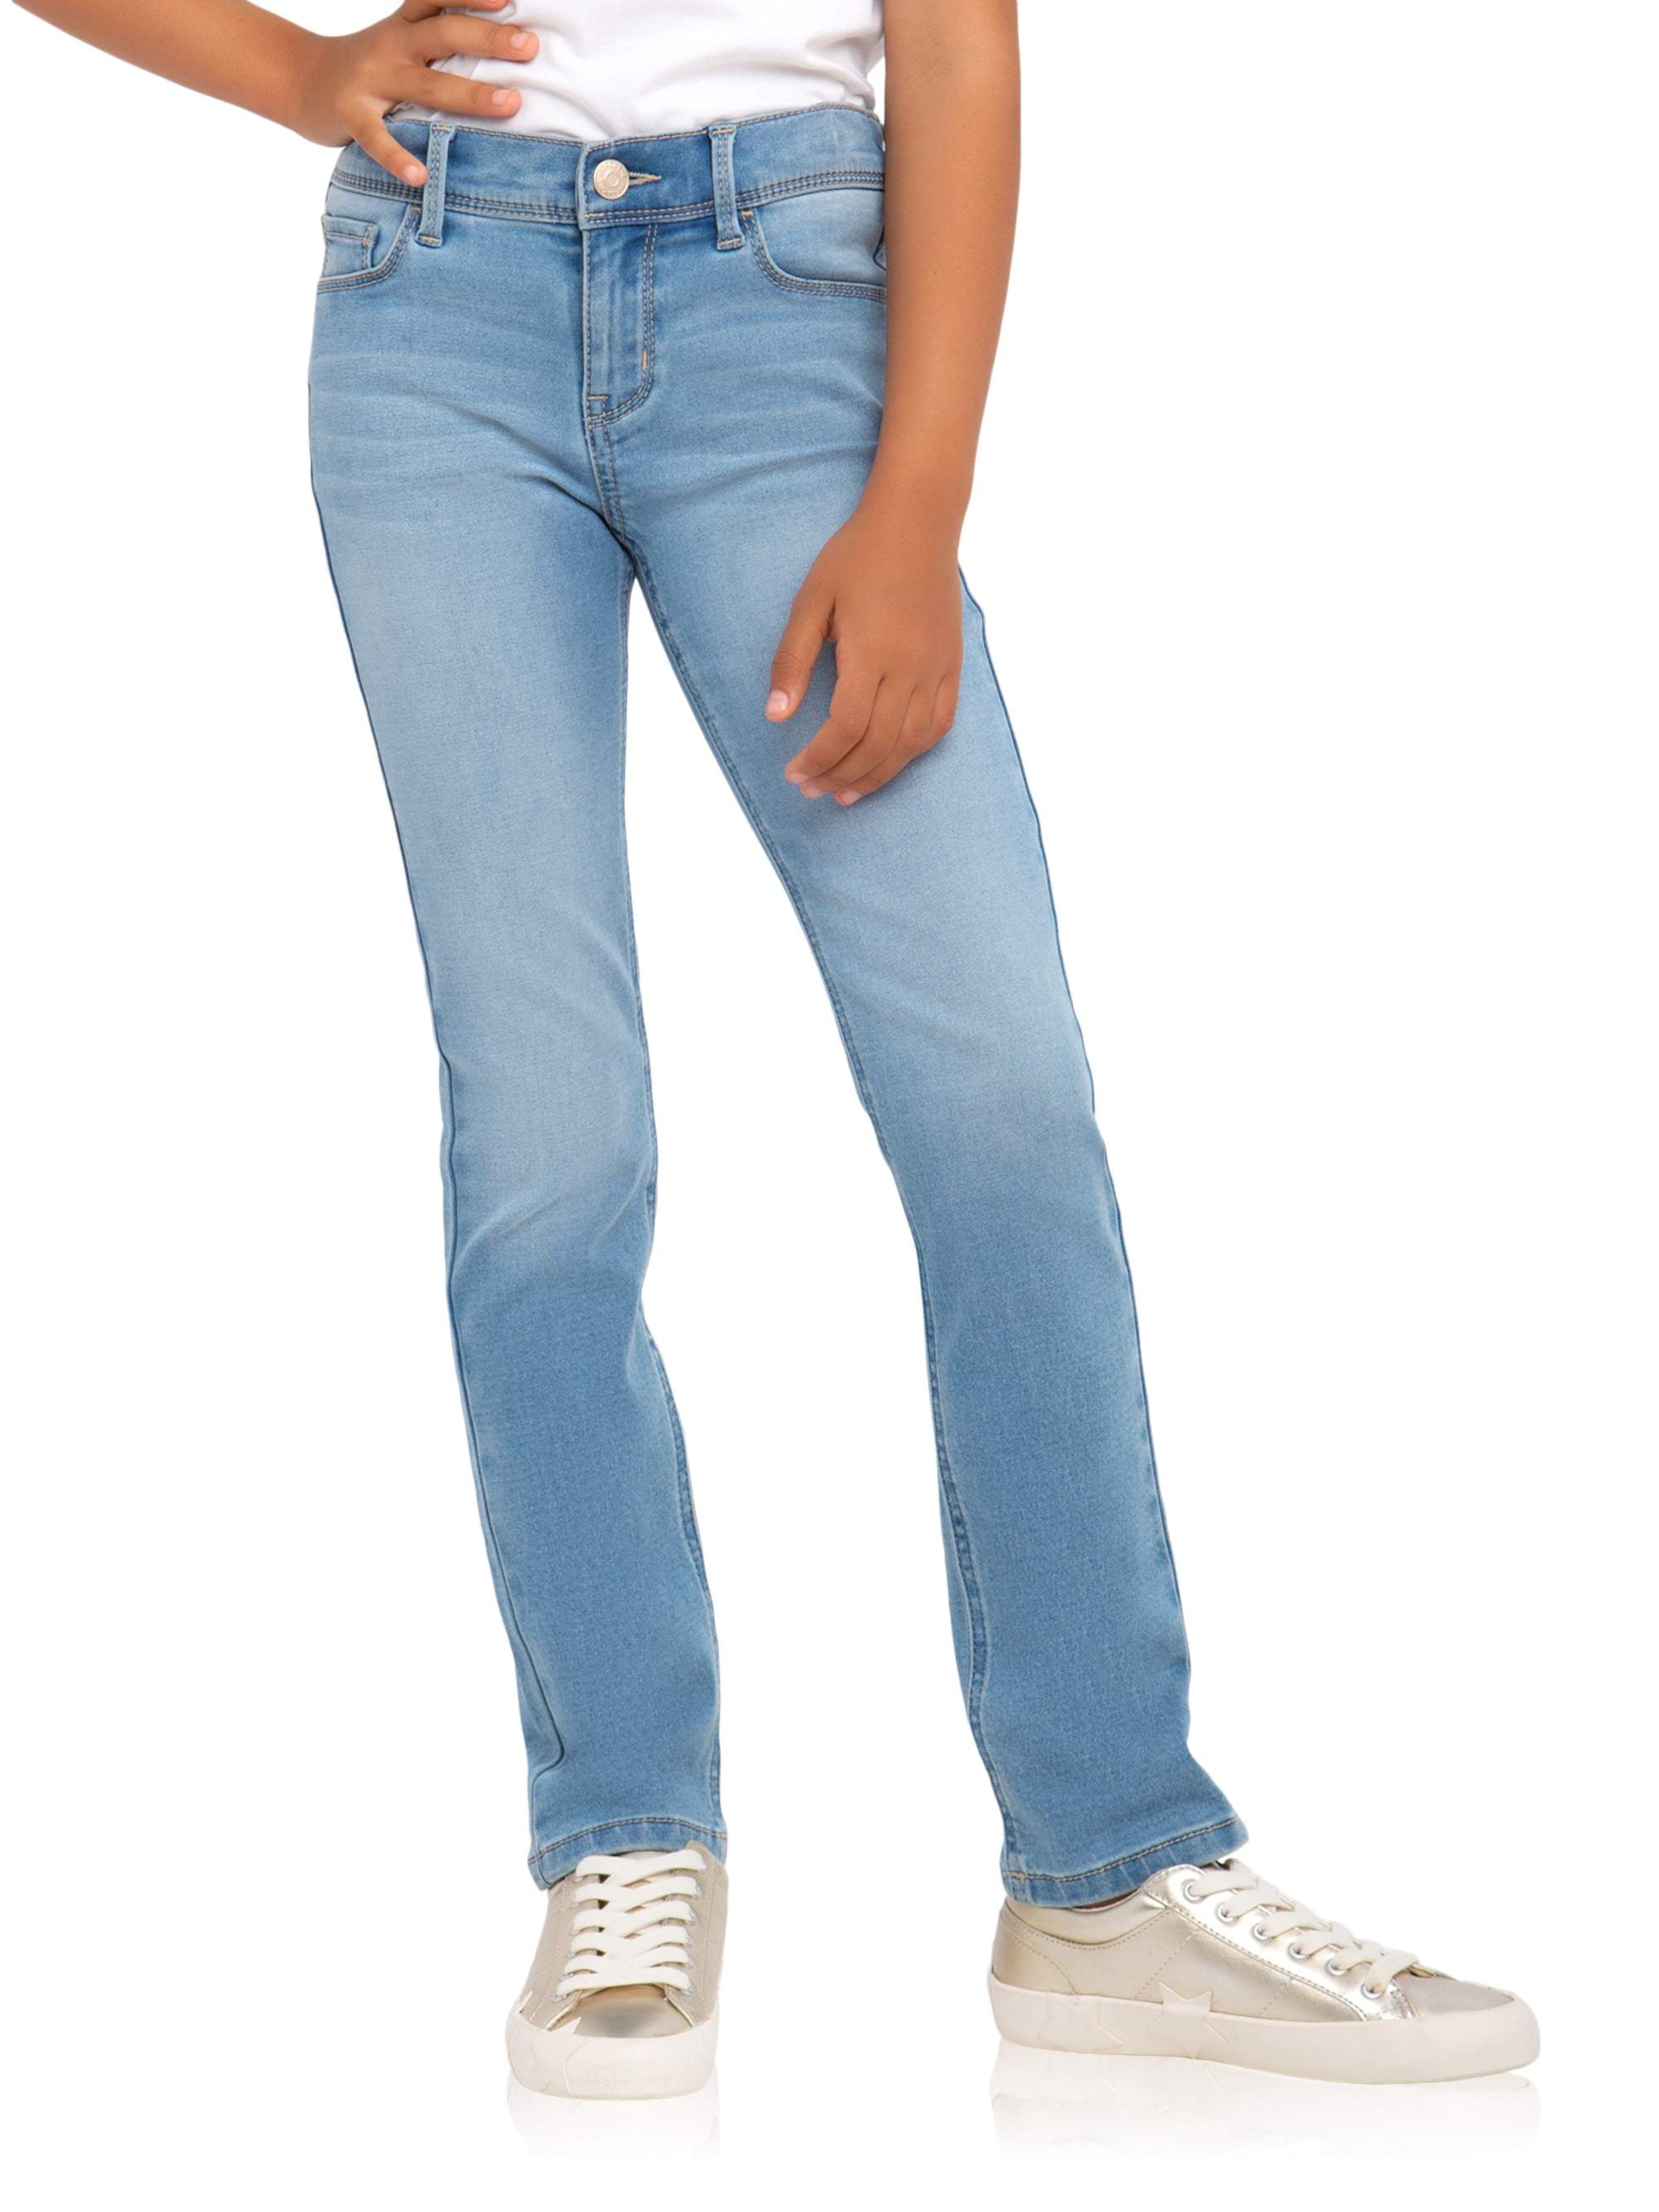 Beige,-Sizes 5-16 Slim Slim Fit Jeans Youth Girls Jordache Super Skinny NWT 